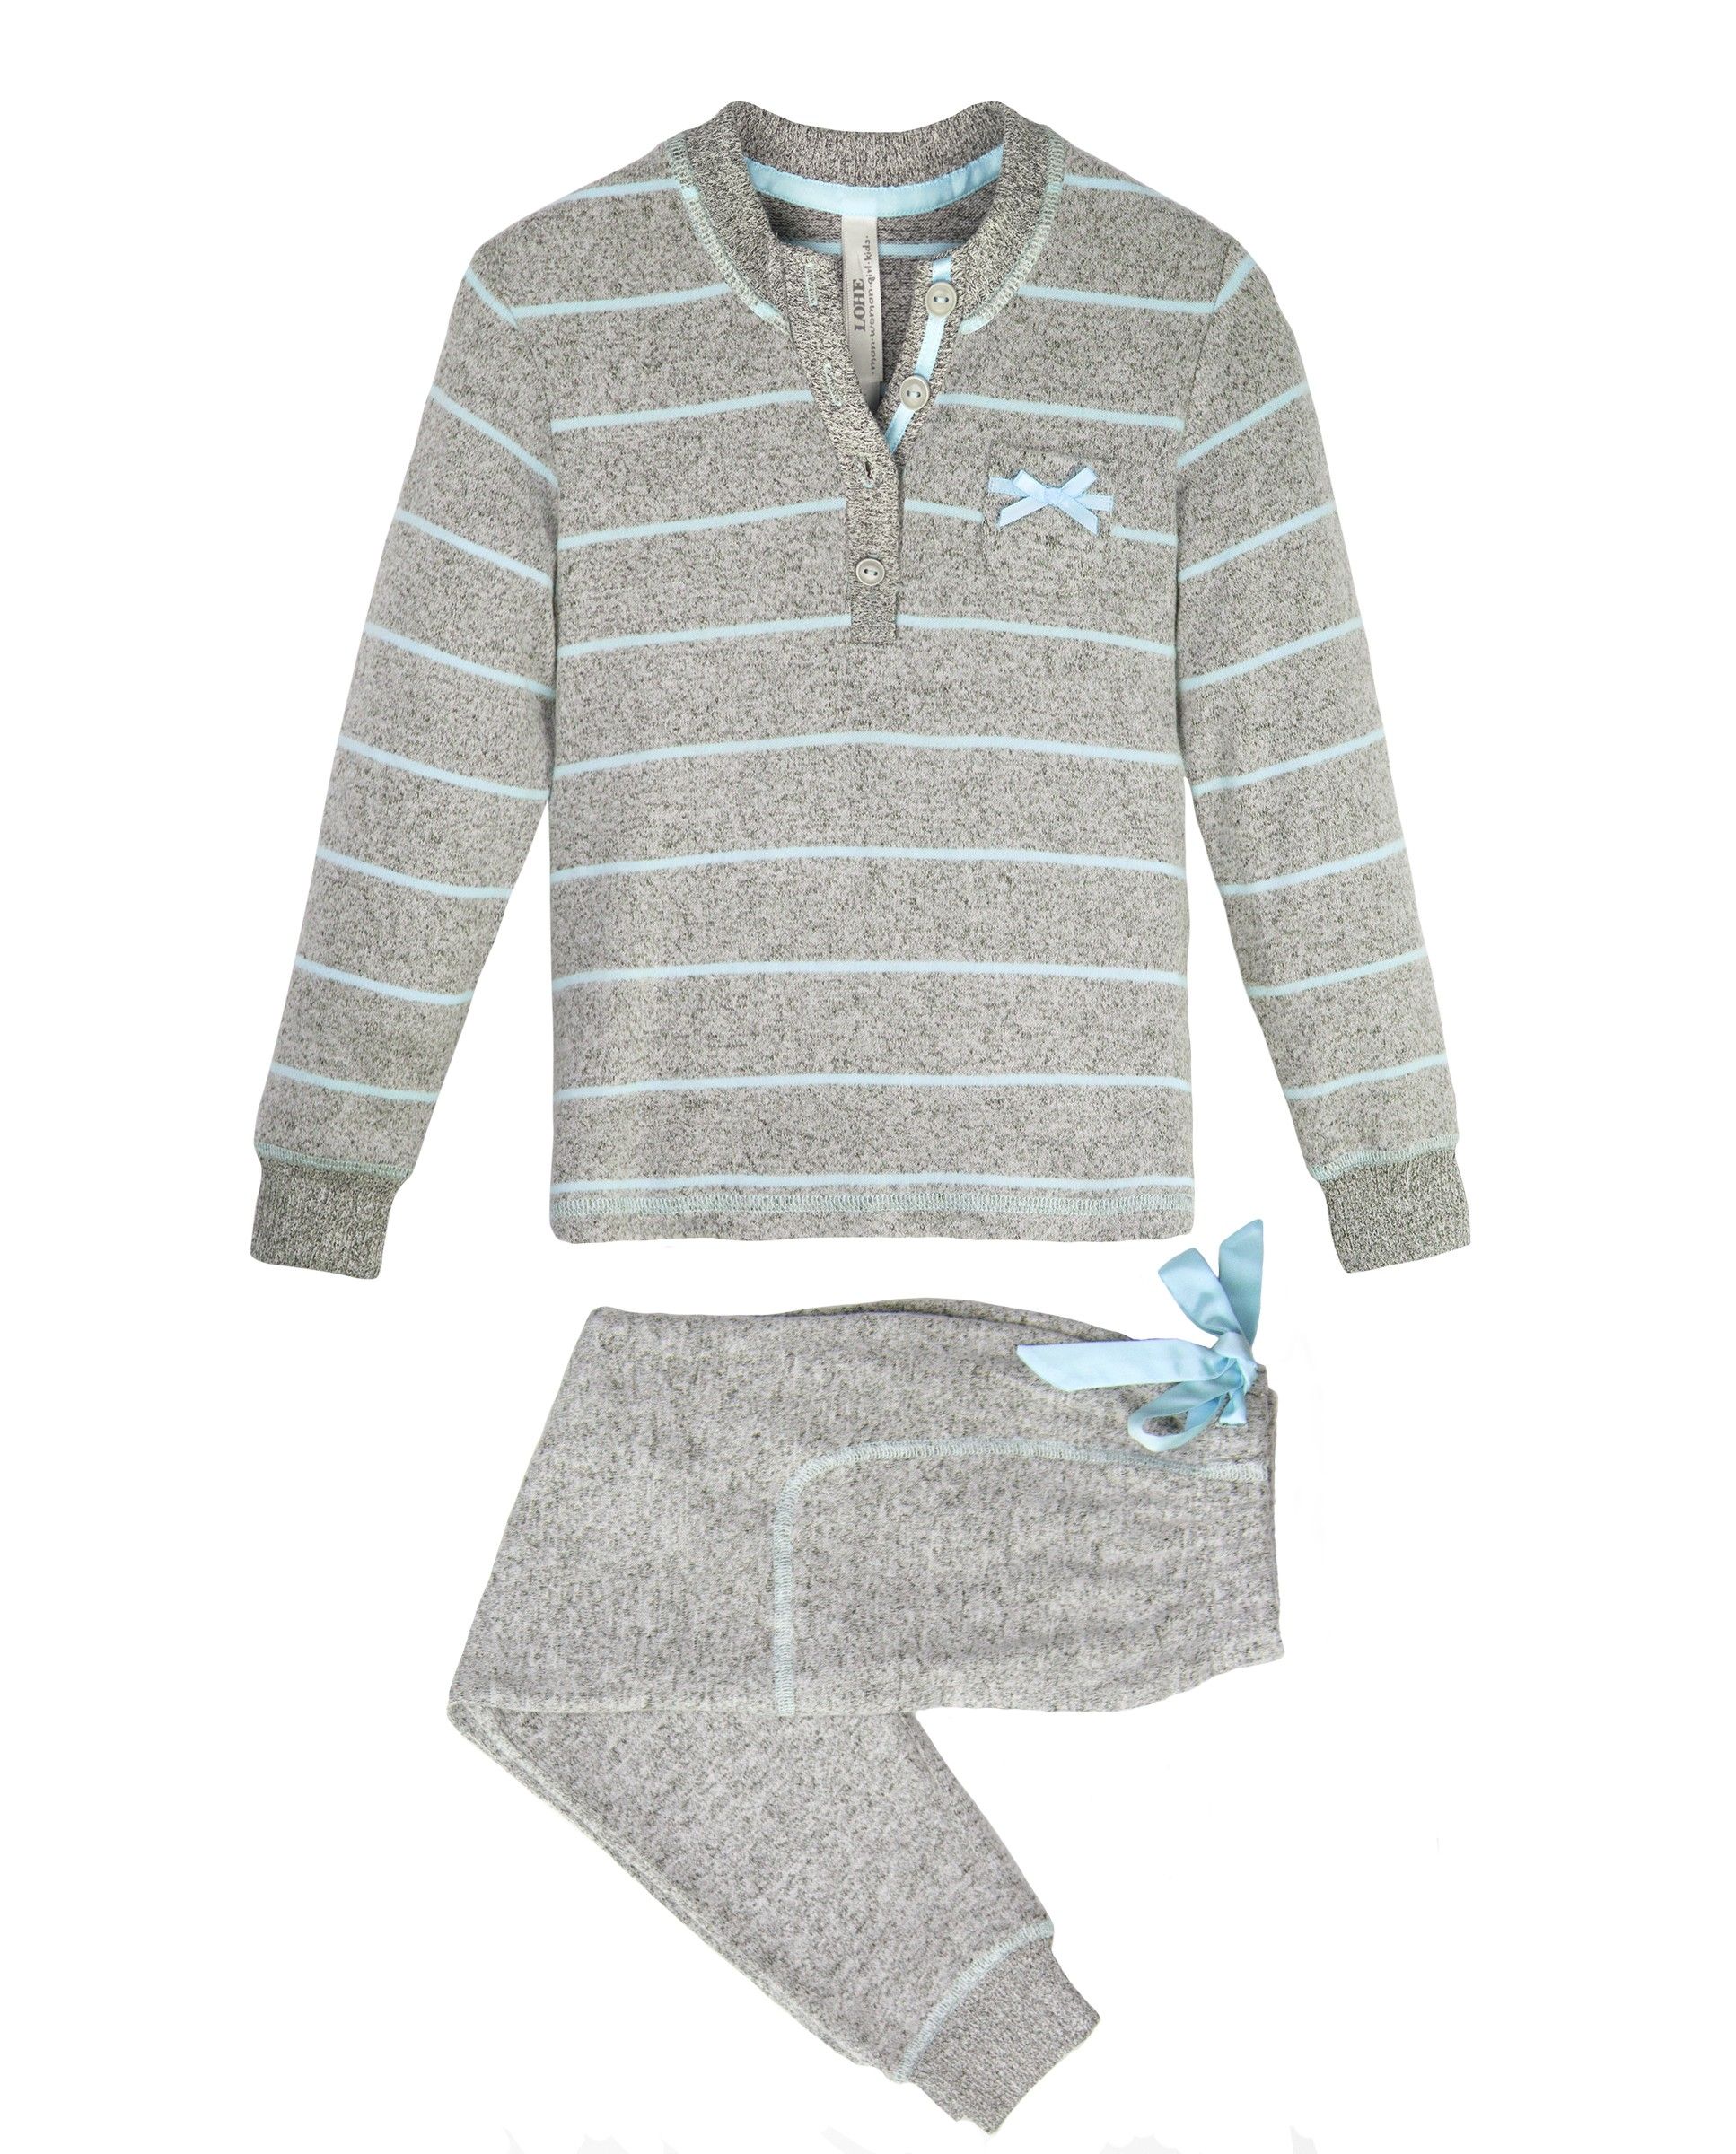 Grey and blue striped pyjama set for girls